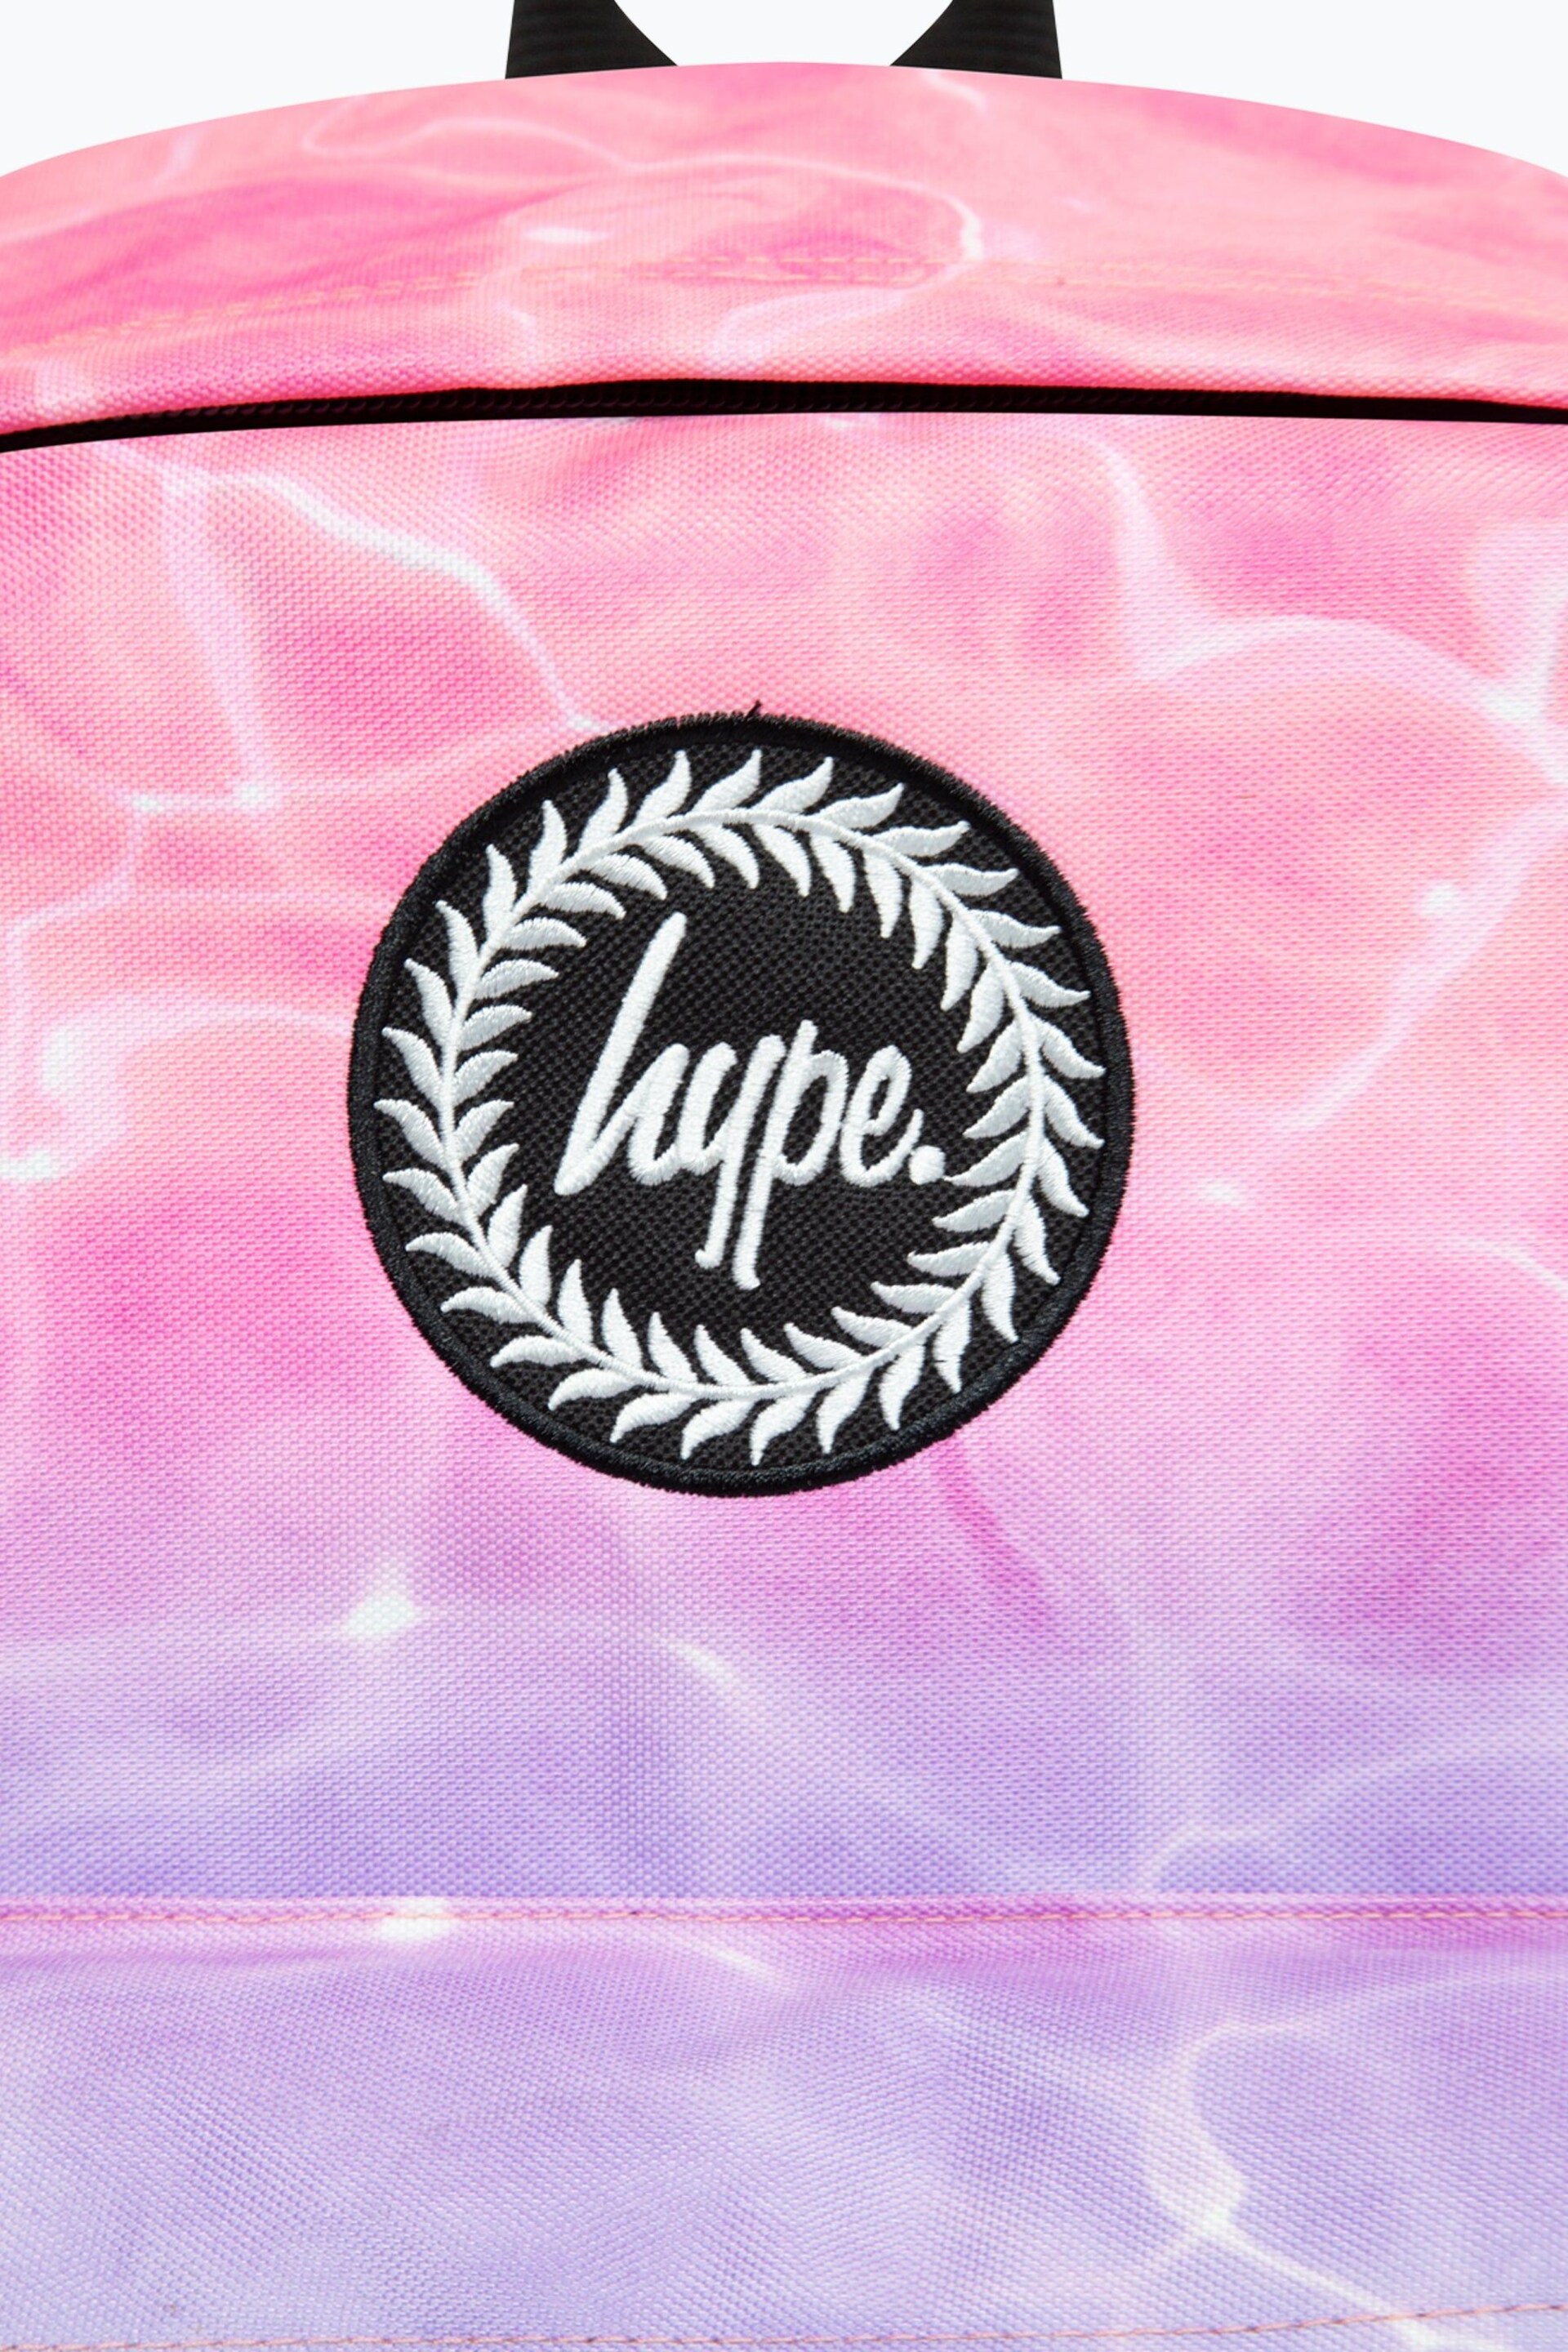 Hype. Multi Pastel Pool Badge Backpack - Image 3 of 3